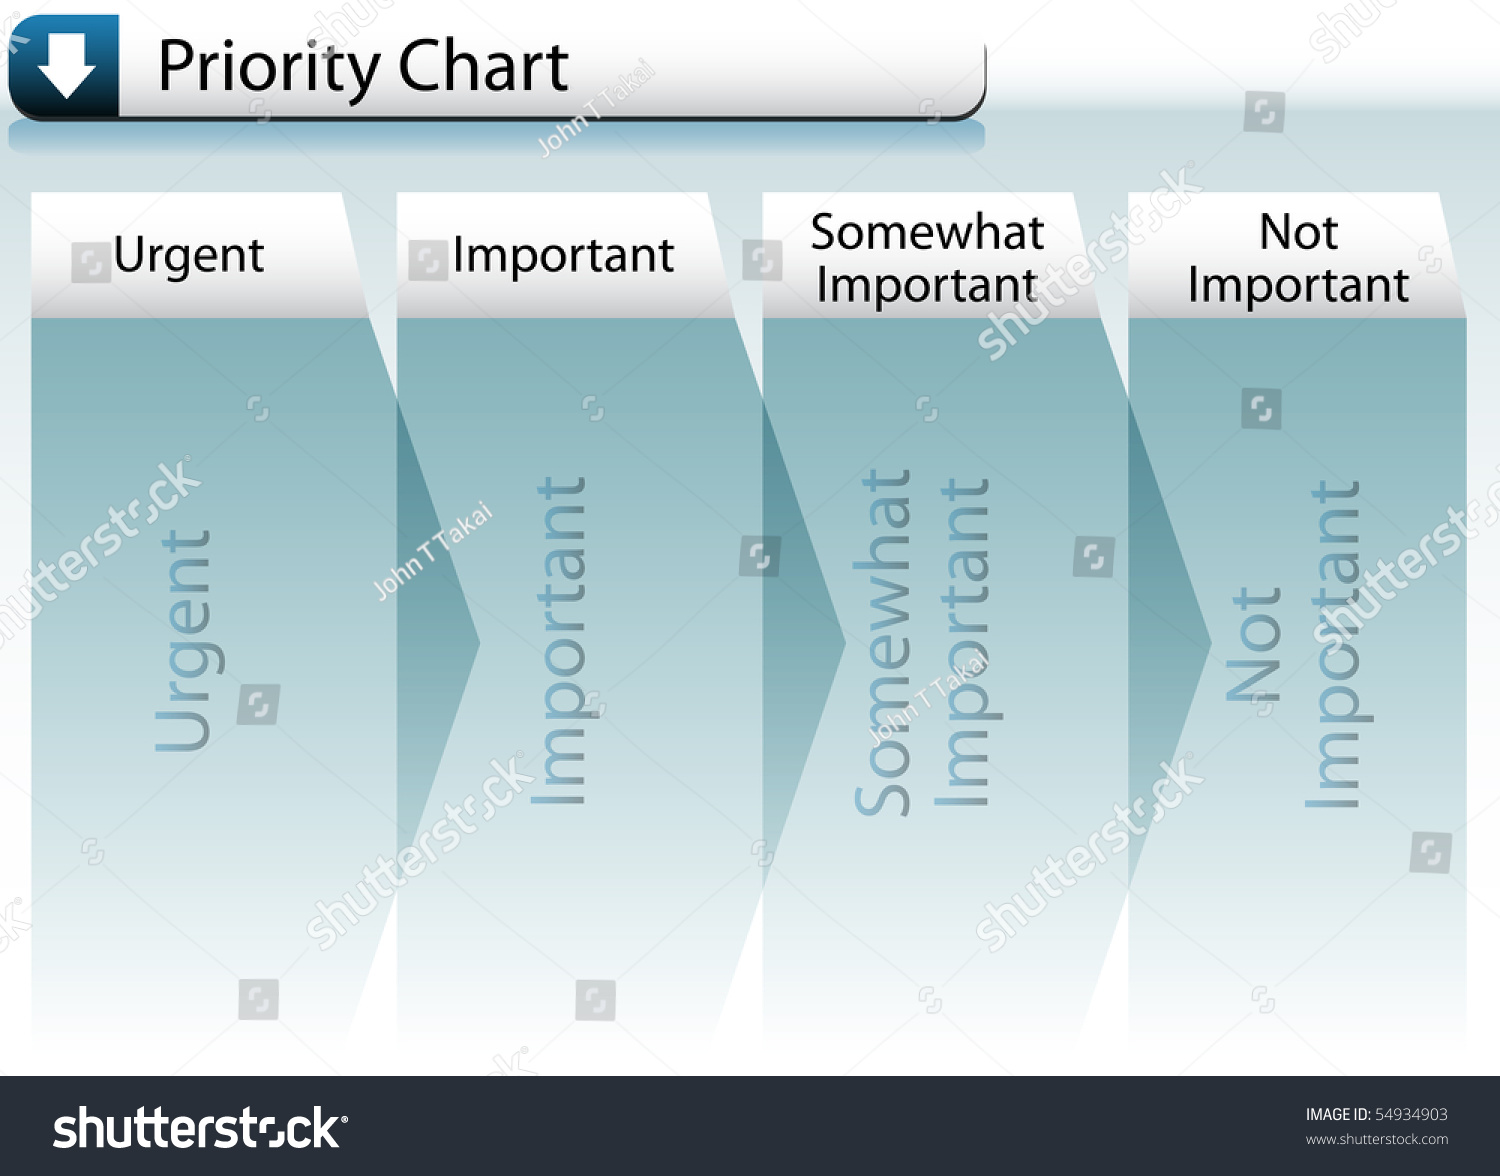 Priority Chart